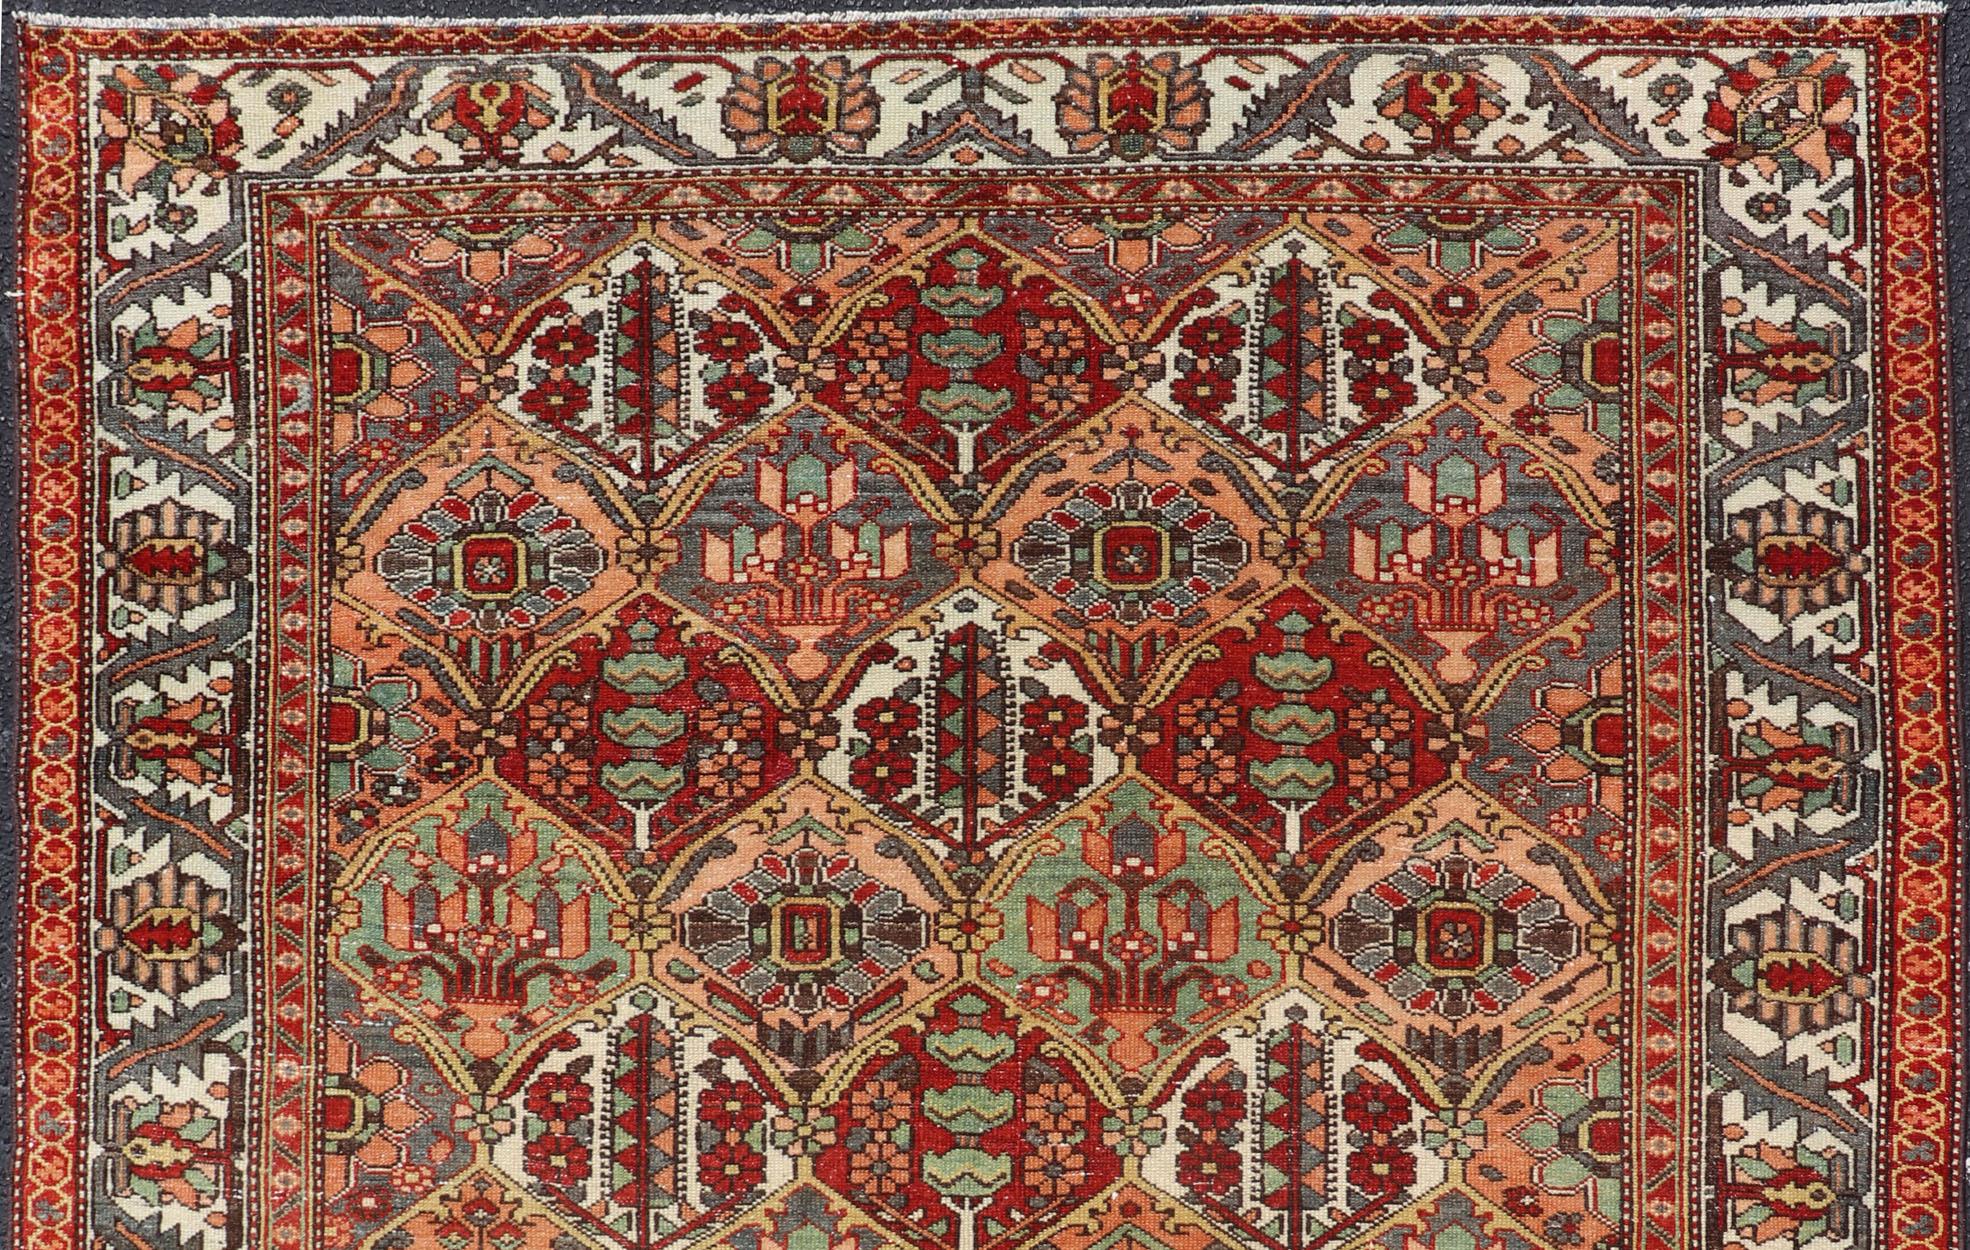 Wool Antique Persian Diamond Garden Design Bakhtiari Rug in Multi Colors For Sale